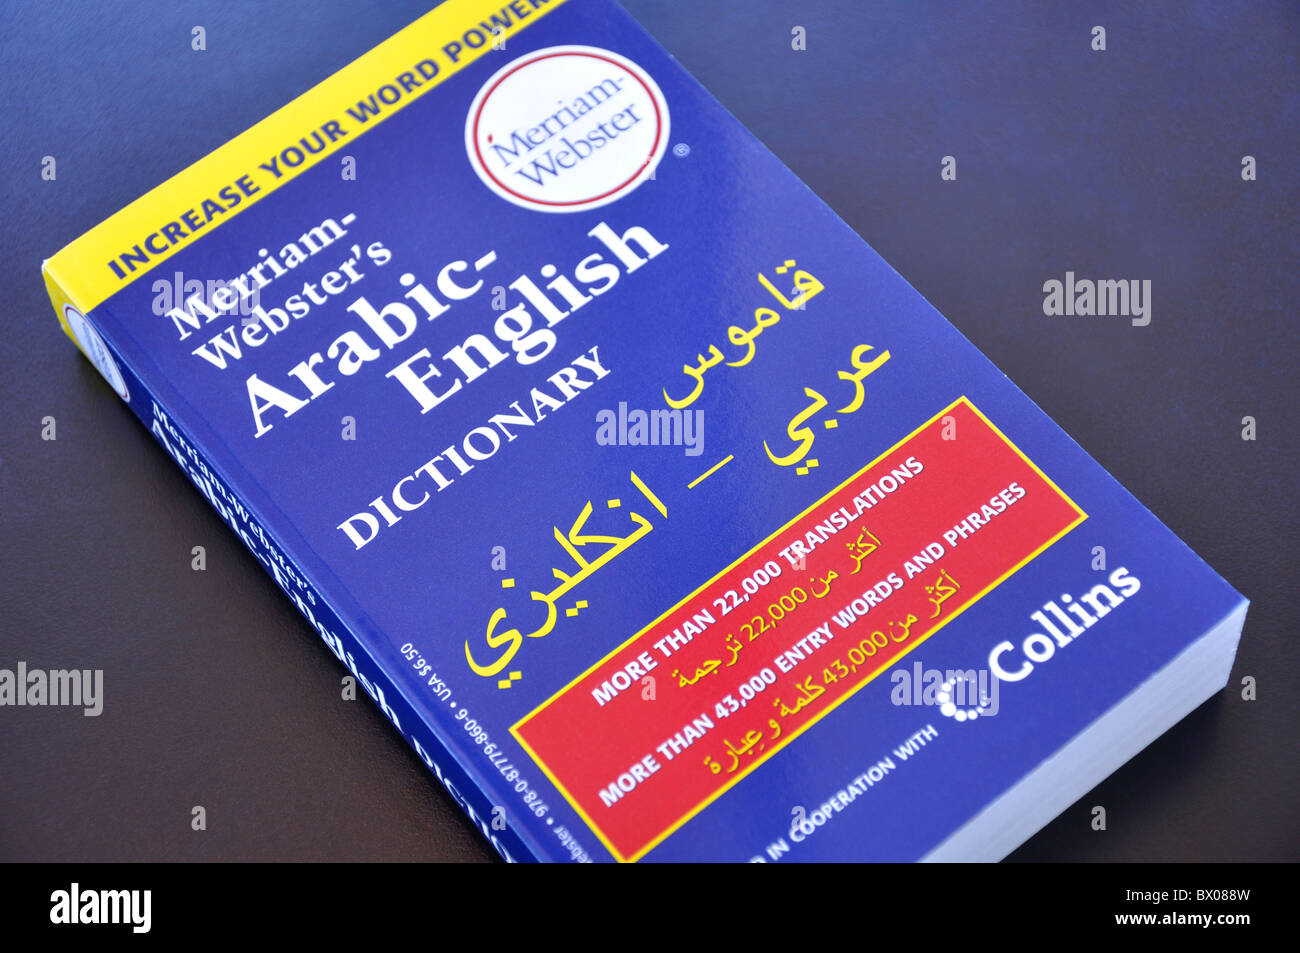 arabic-english-dictionary-stock-photo-alamy